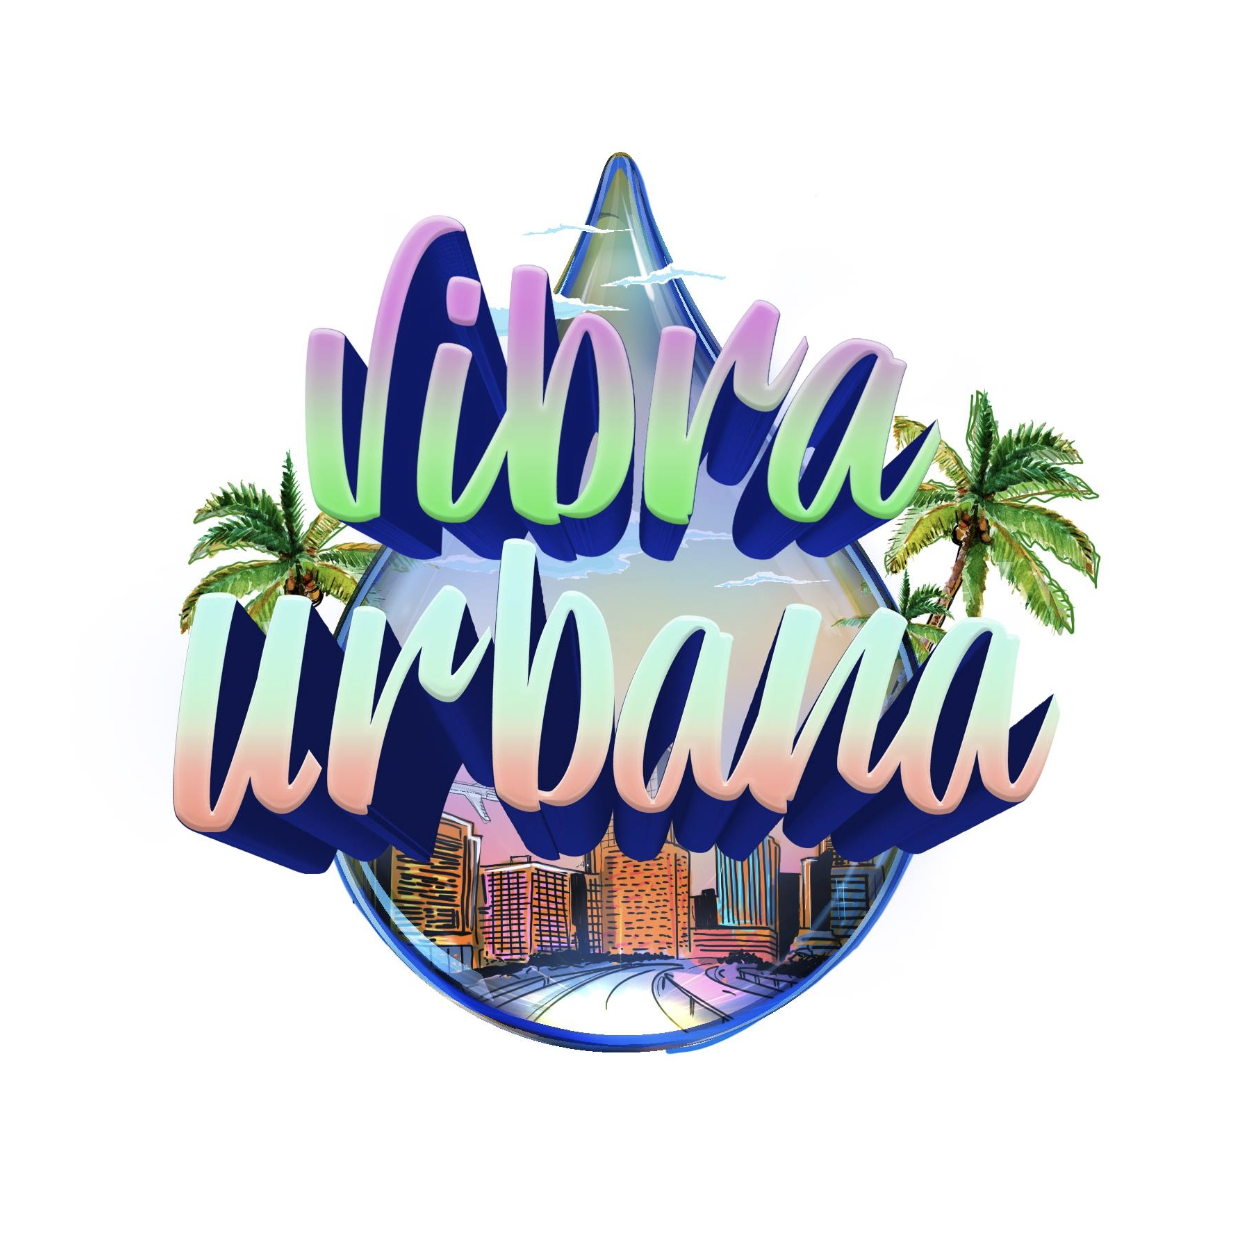 Vibra Urbana Orlando icon